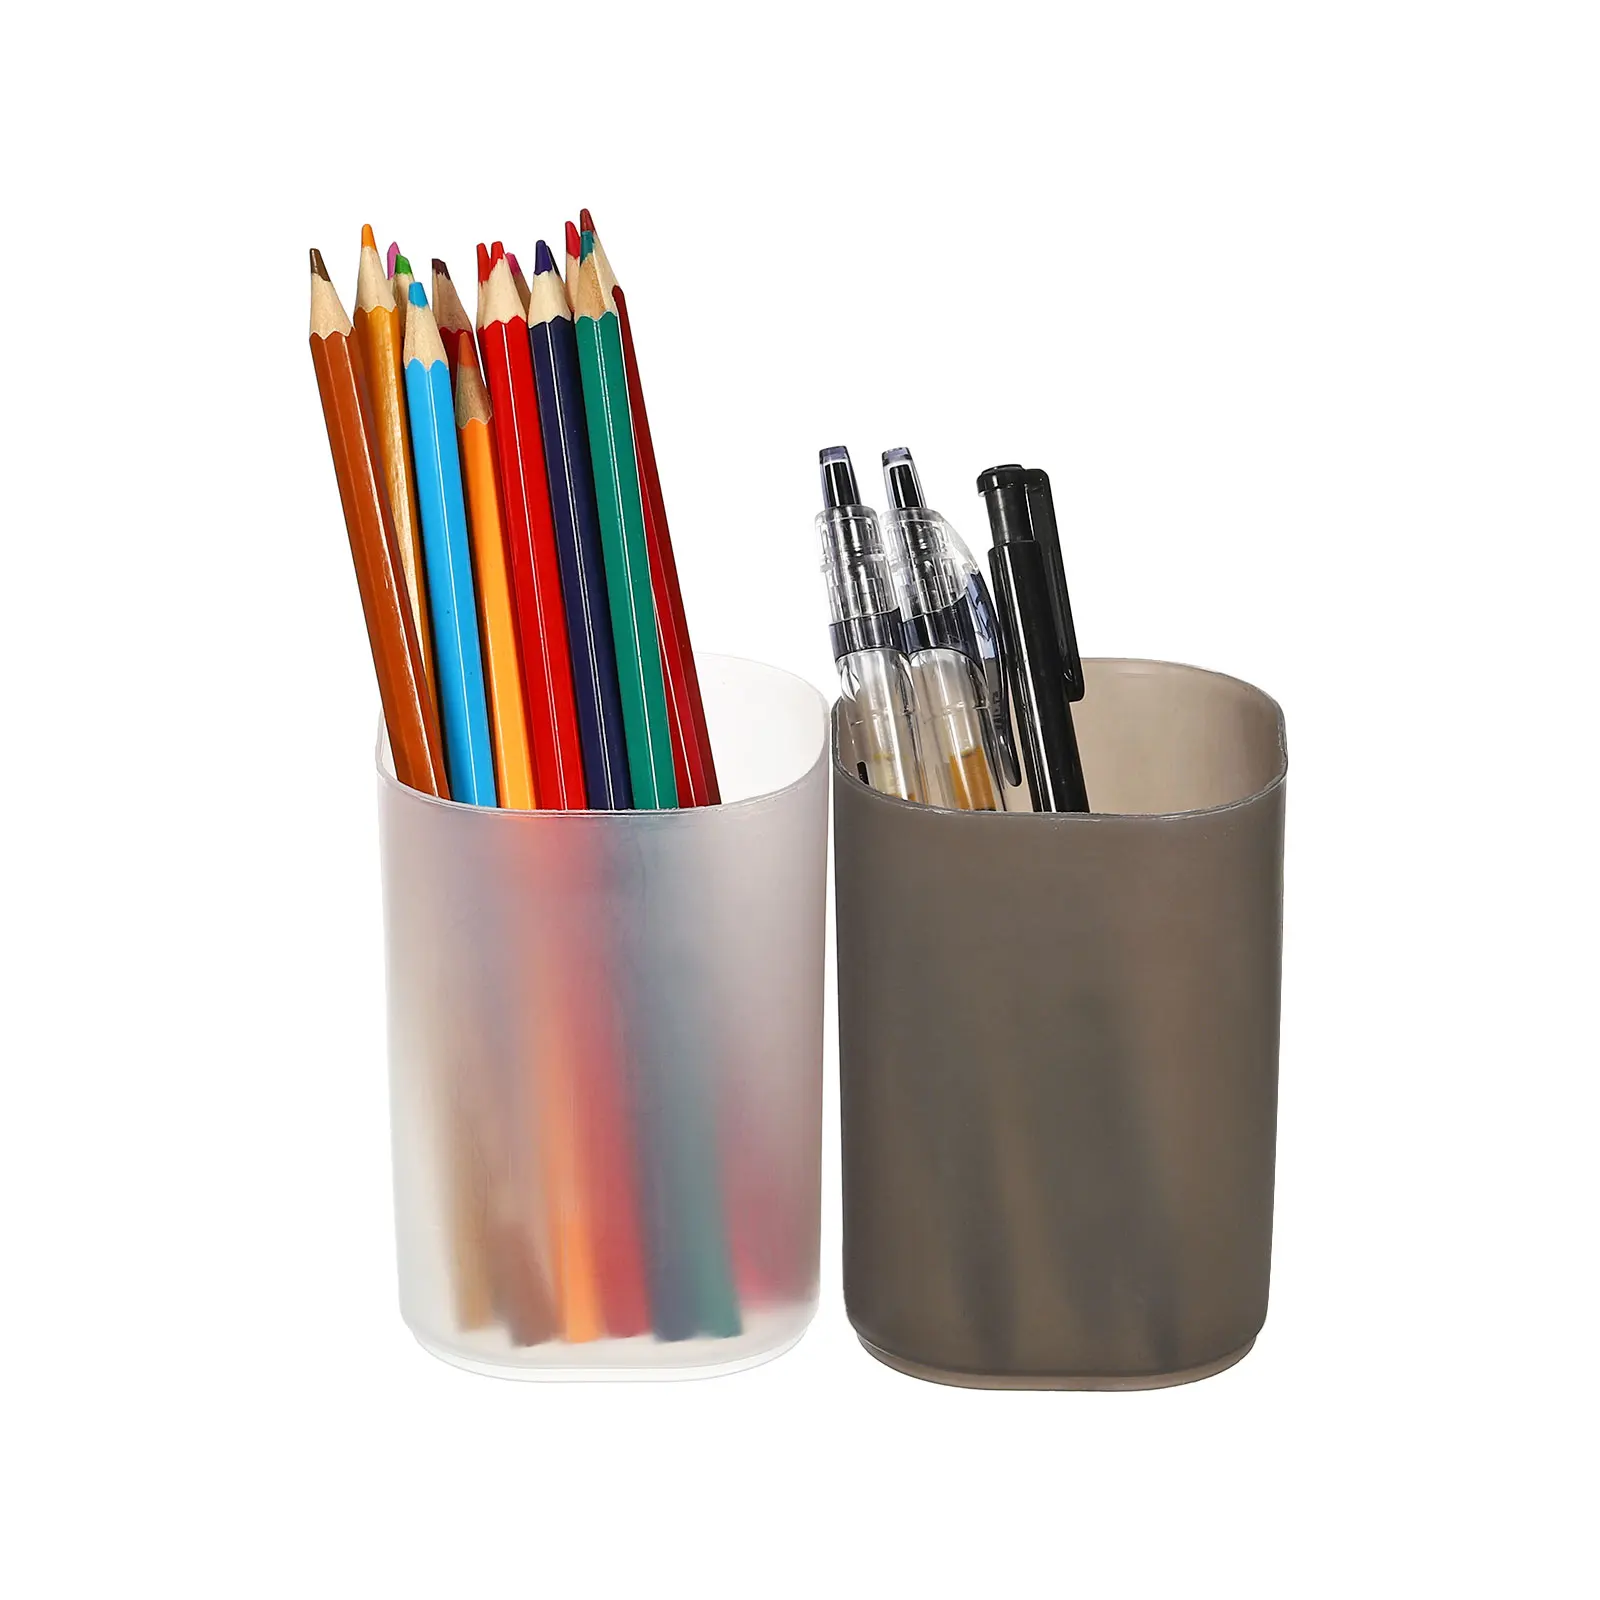 4Pcs Desktop Pen Holder Plastic Pencil Cup Containers Makeup Desk Organizers Storage Stationery Box Office Organizer Accessories